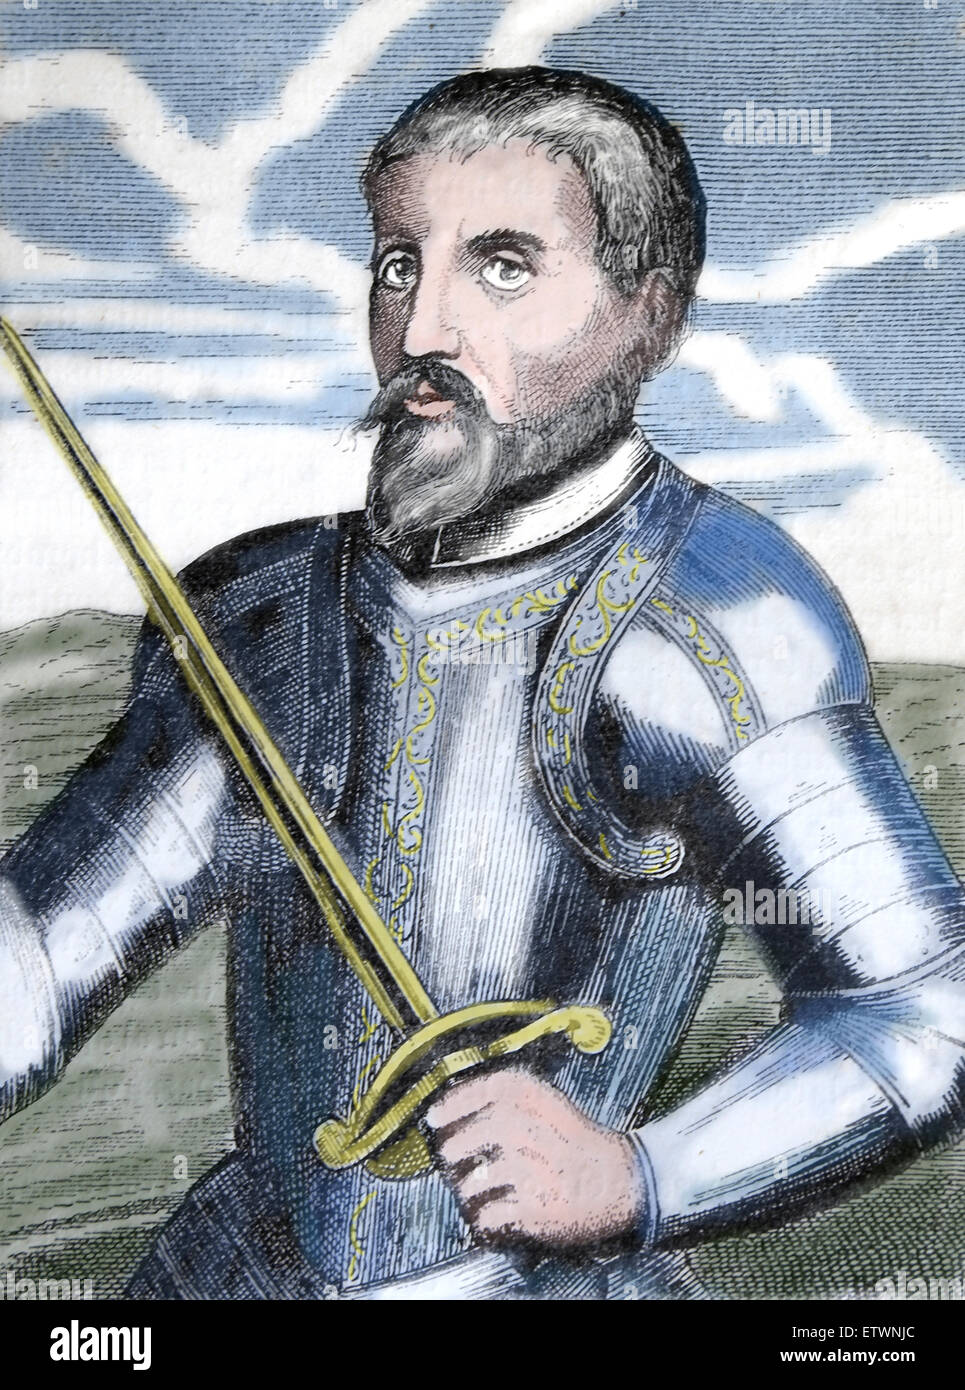 Hernando del Soto (1496-1542). Spanish explorer and conquistador. 1st European expedition into Unites States. Portrait. Stock Photo